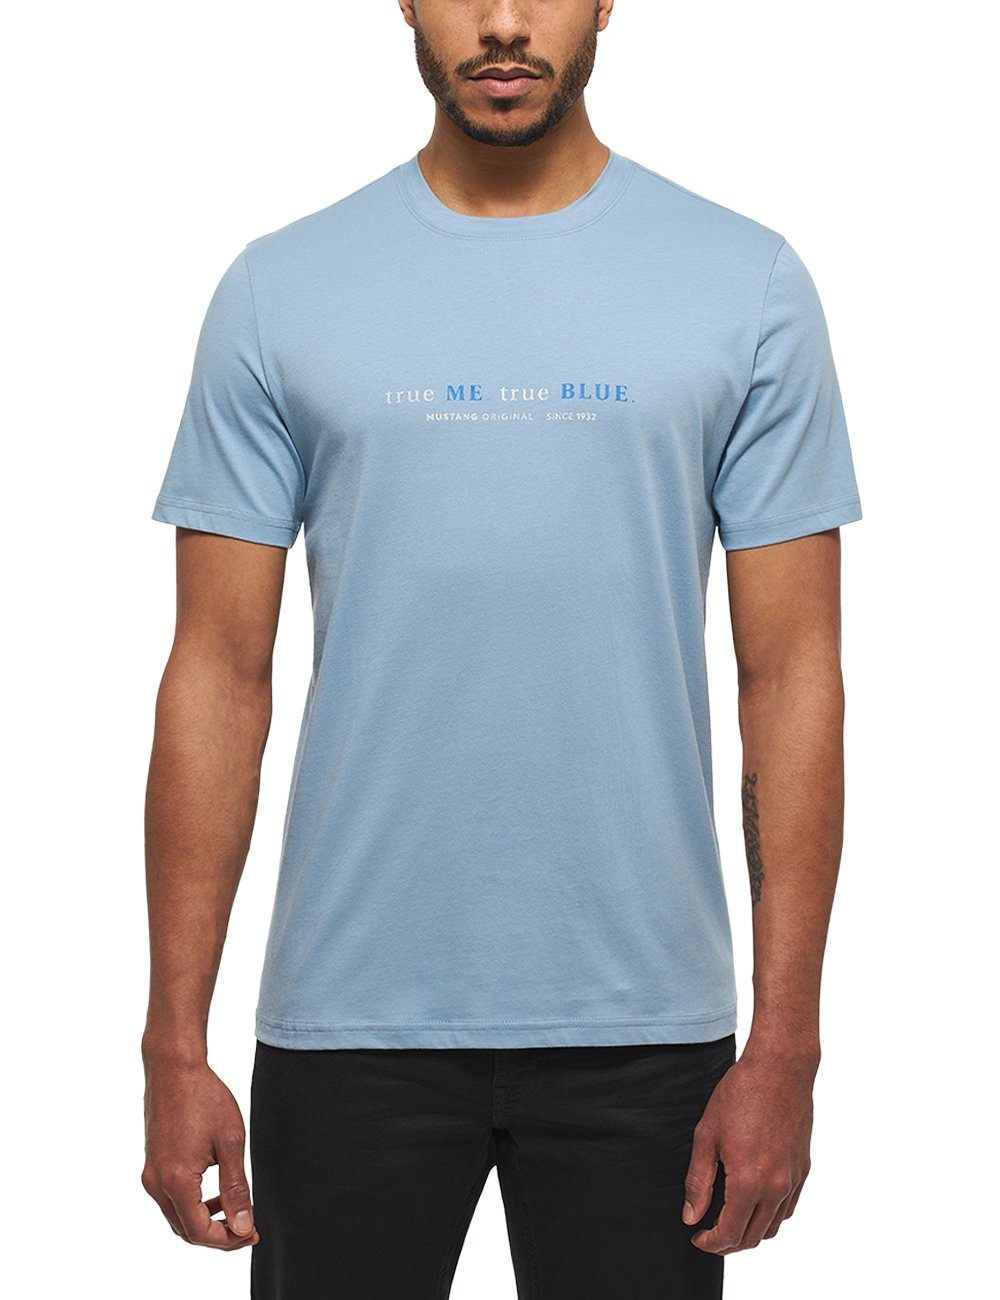 Alex Style T-Shirt Baumwolle Print, MUSTANG Reine C